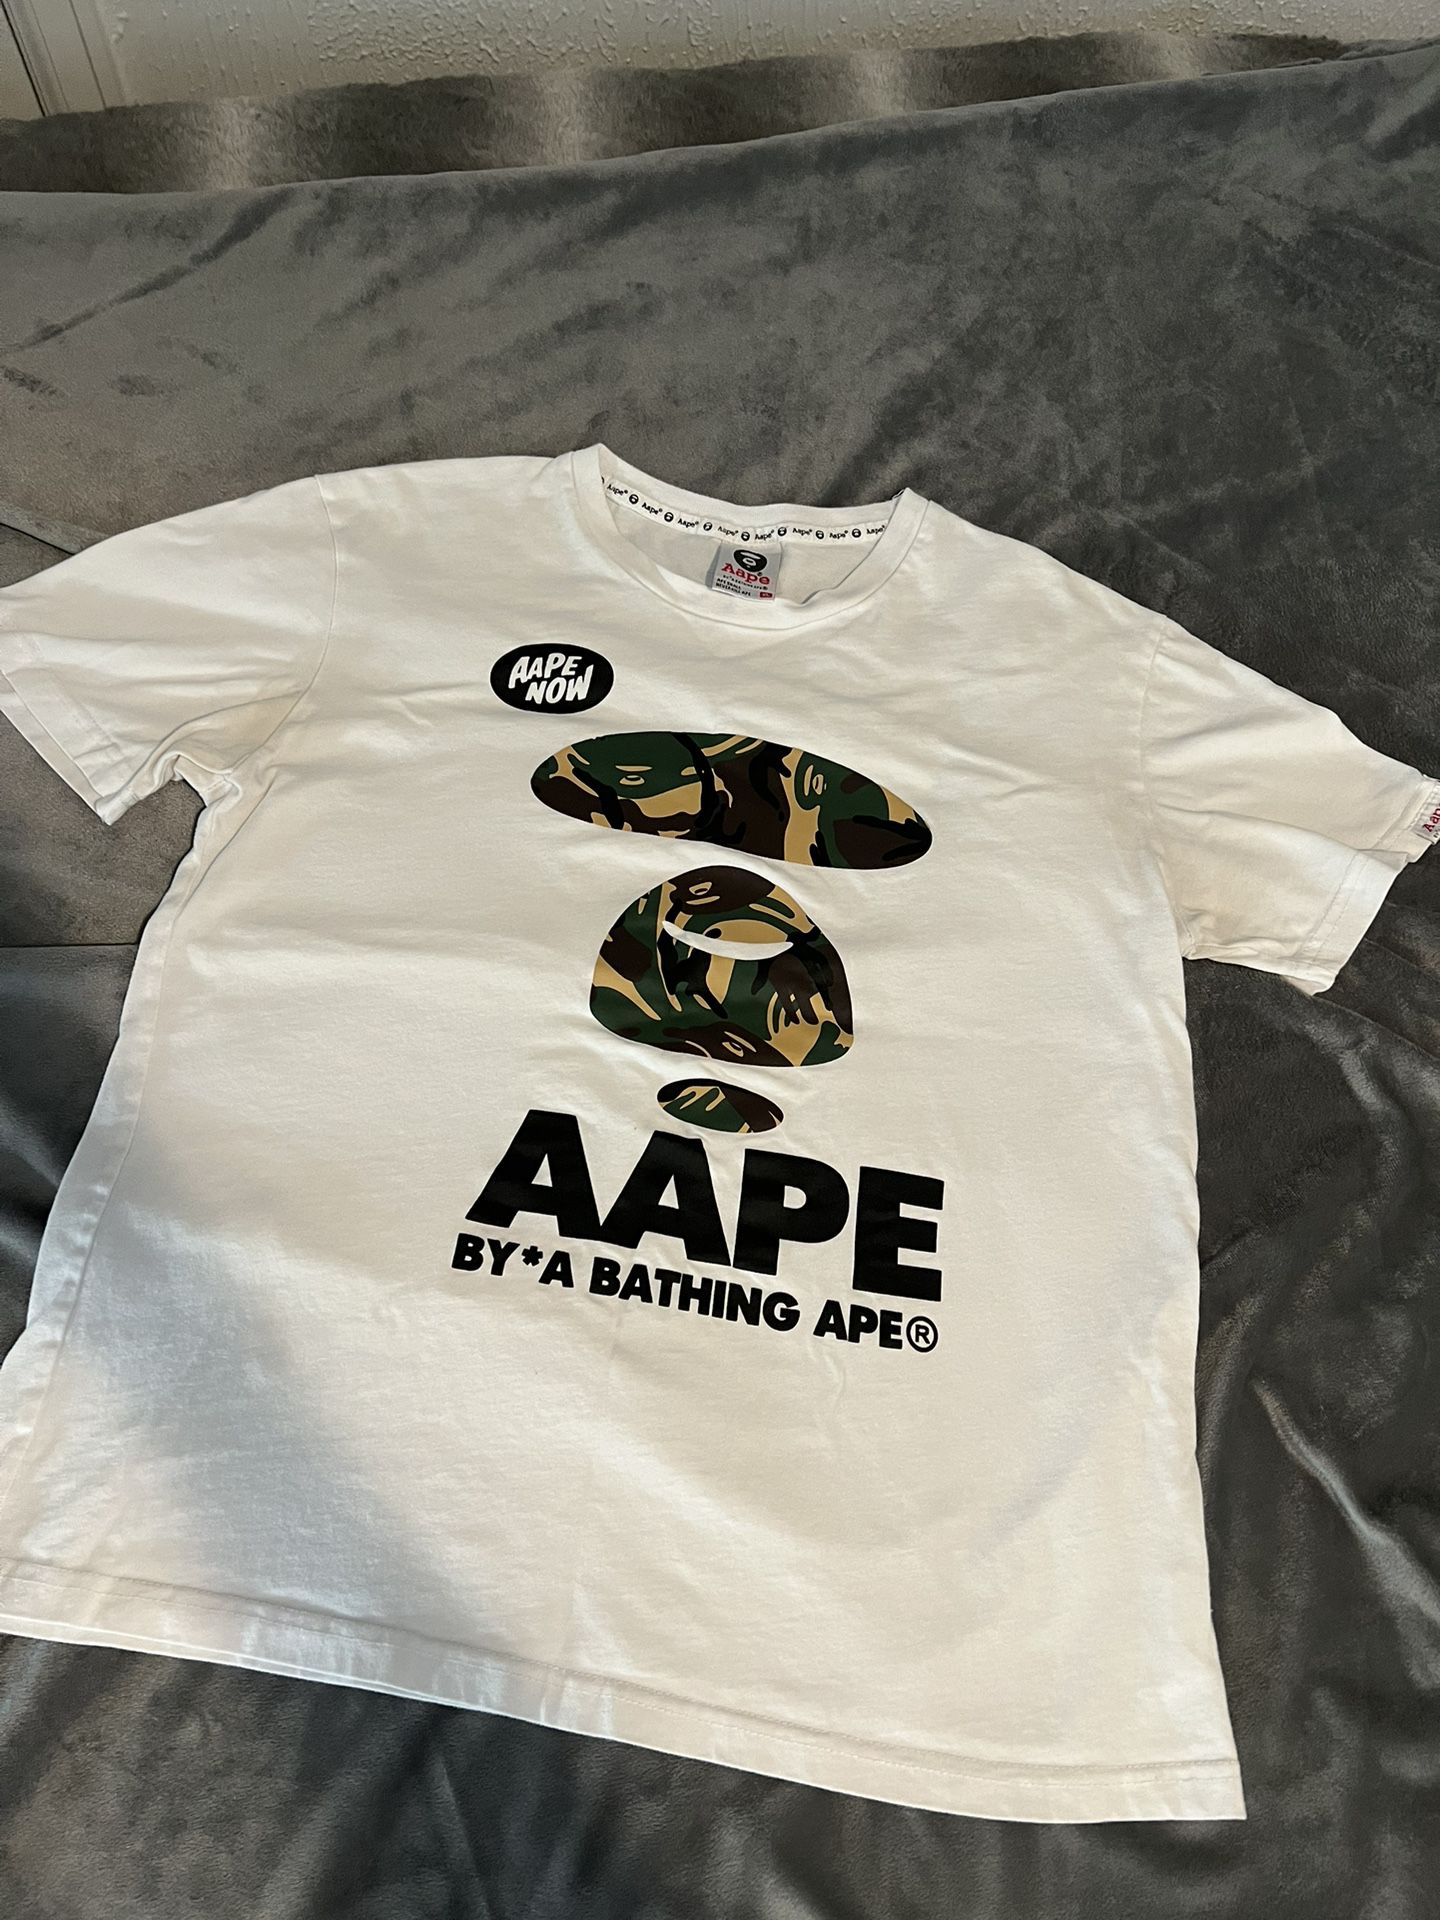 Bape AApe Shirt 